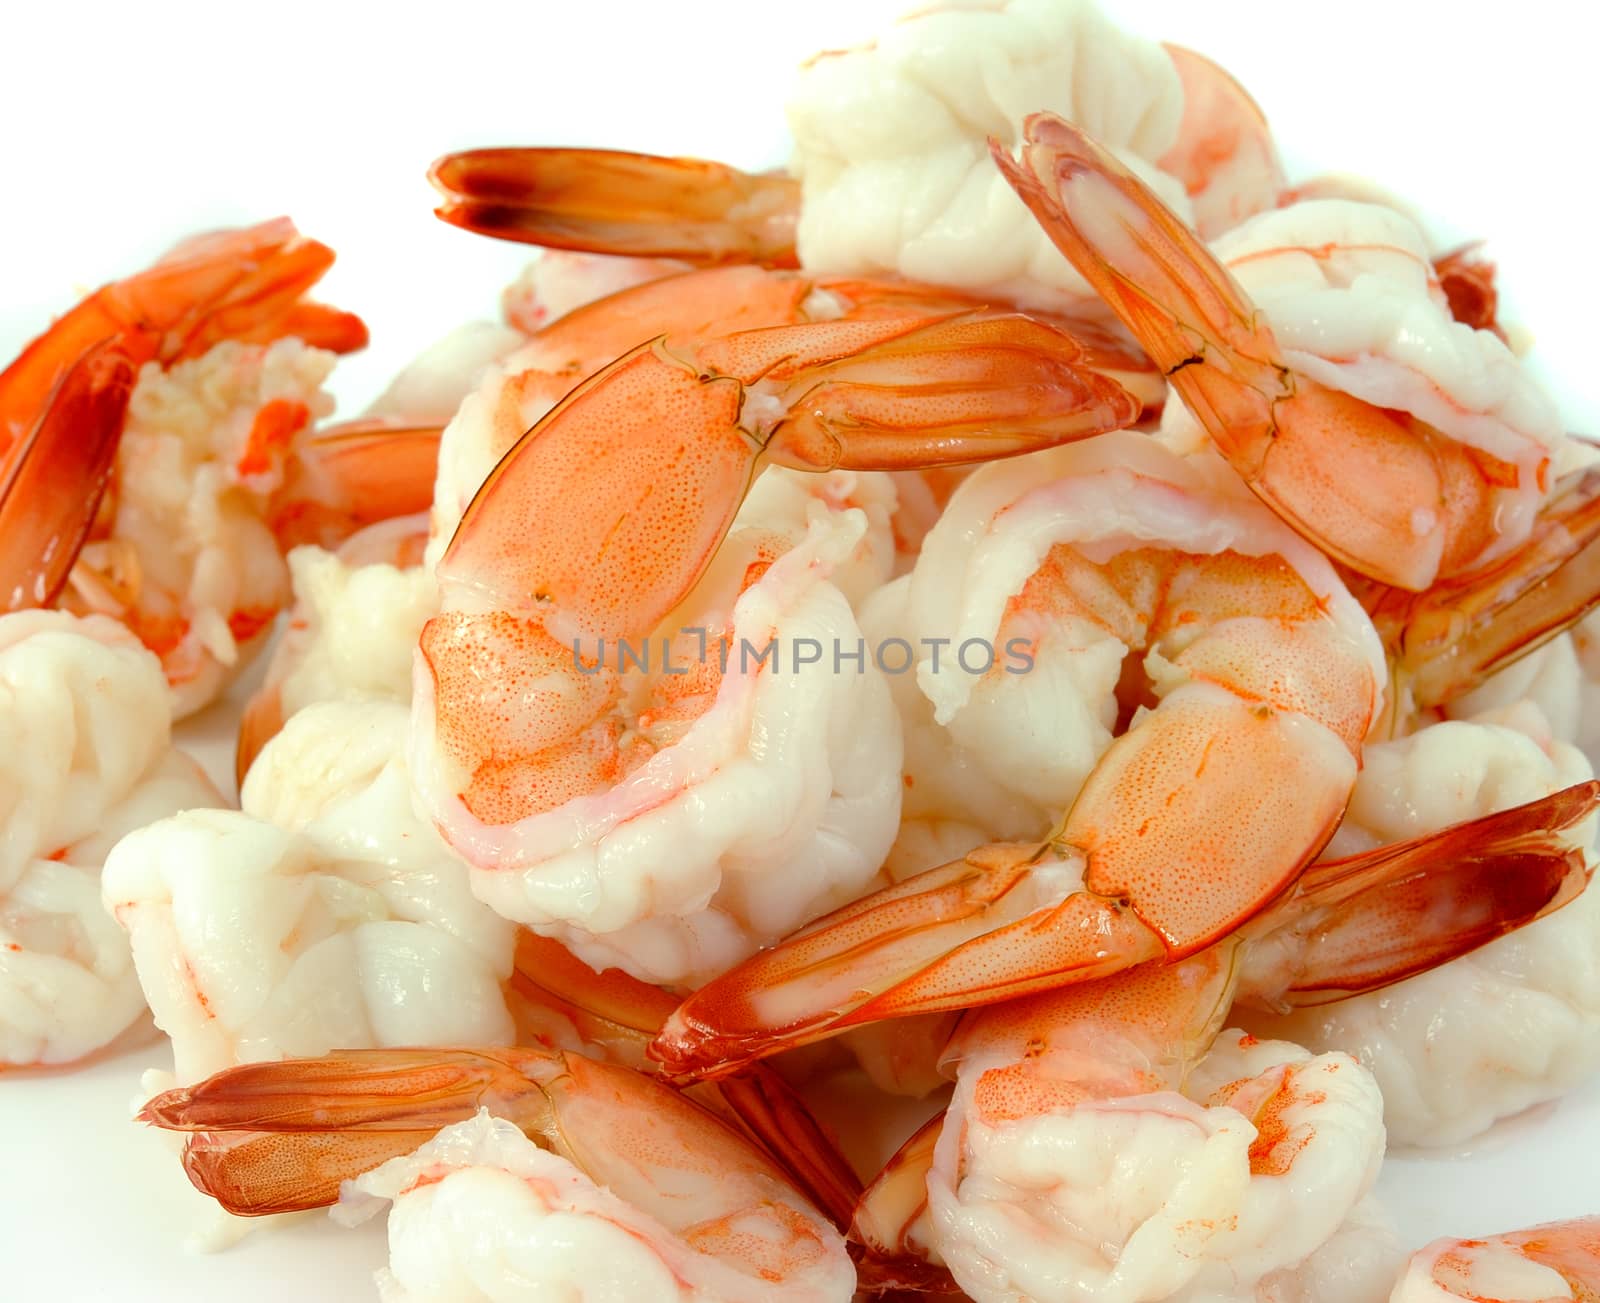  shrimps on a white background